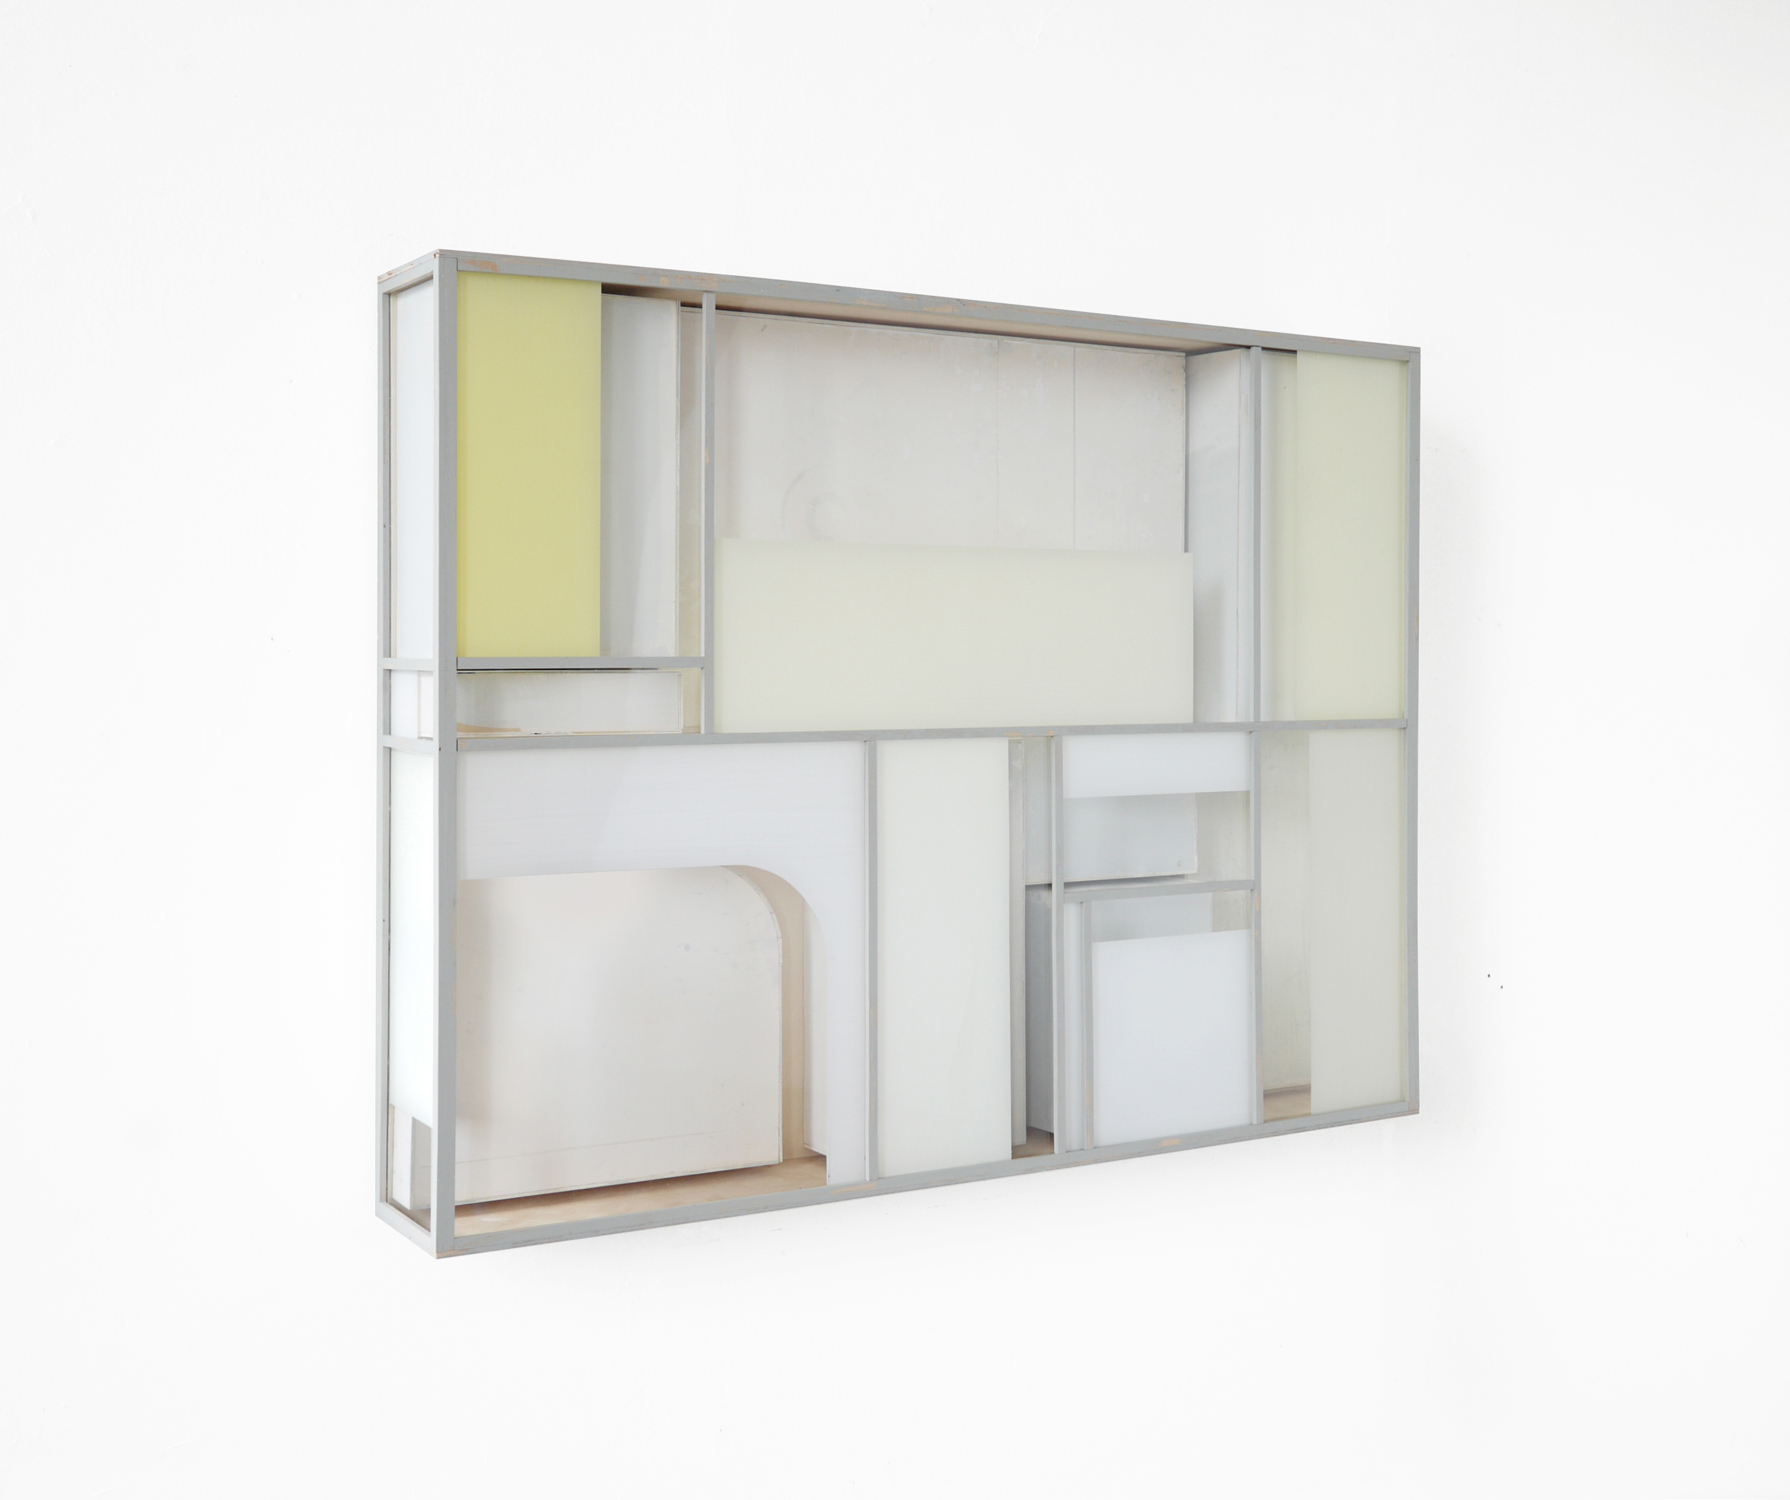  Minimal KA, 2018, wood, acrylic glass, paint, 89 x 117 x 17 cm 